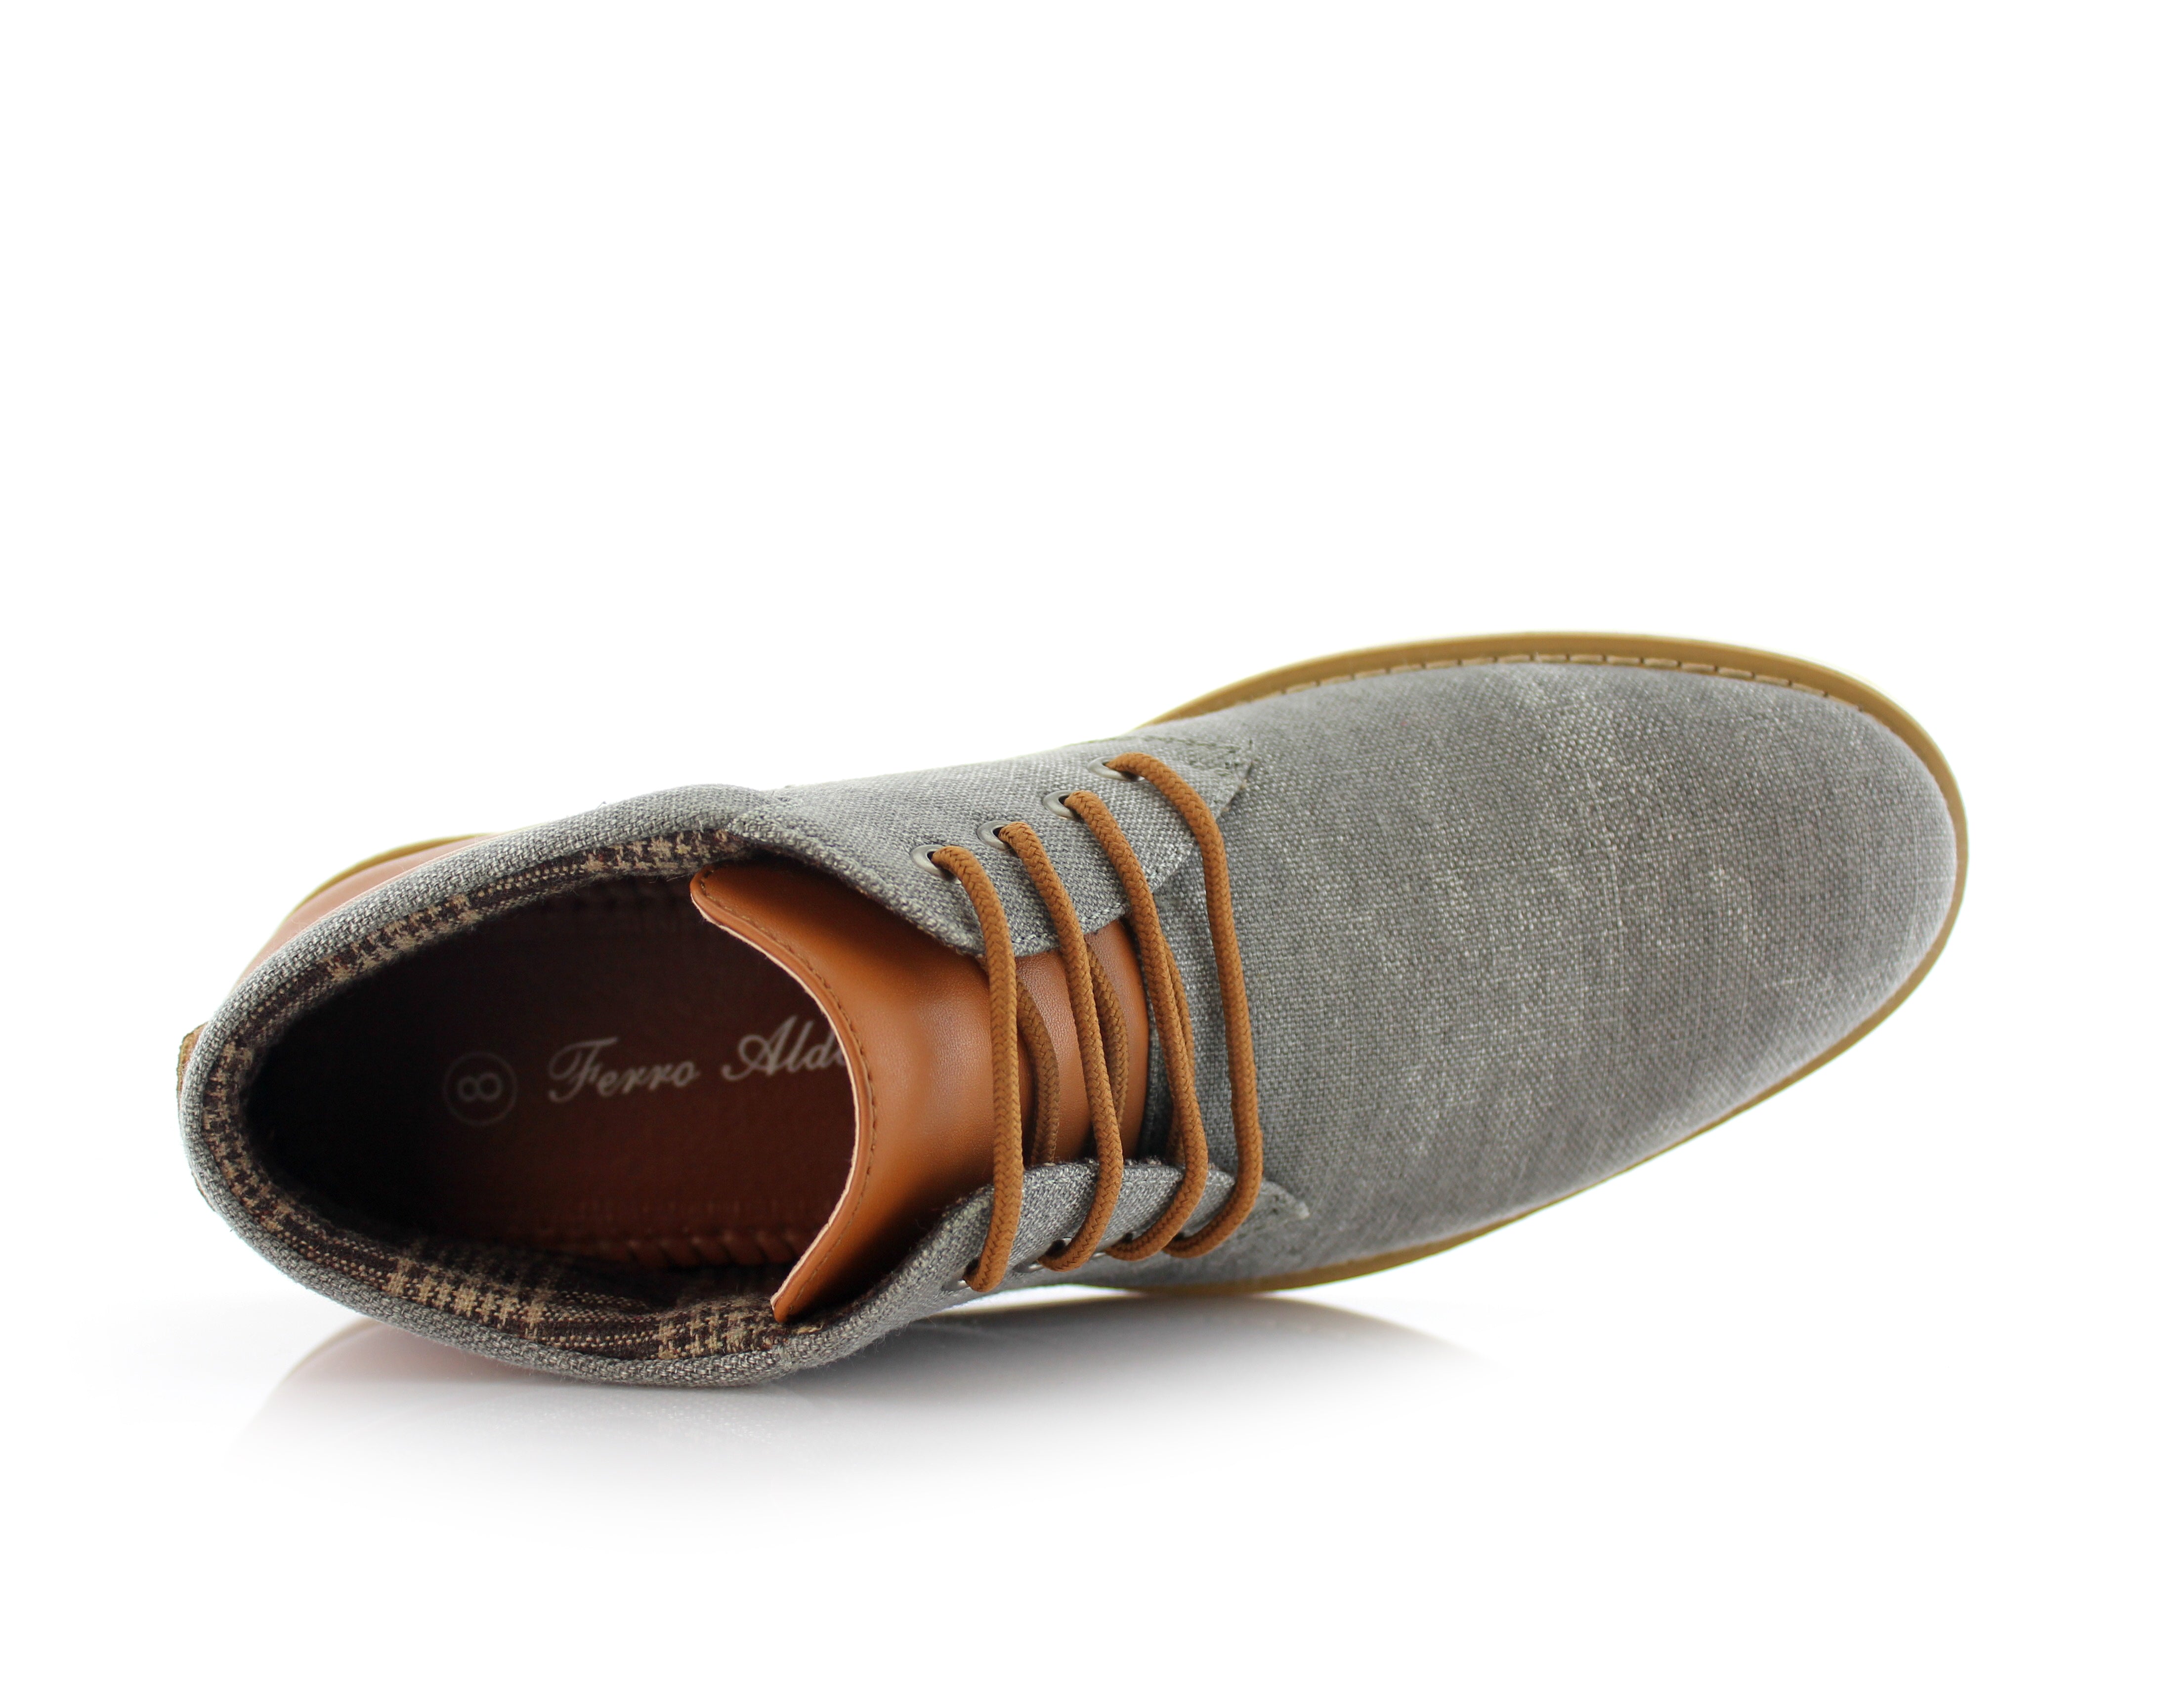 Two-Toned Chukka Sneaker Boots | Owen by Ferro Aldo | Conal Footwear | Top-Down Angle View